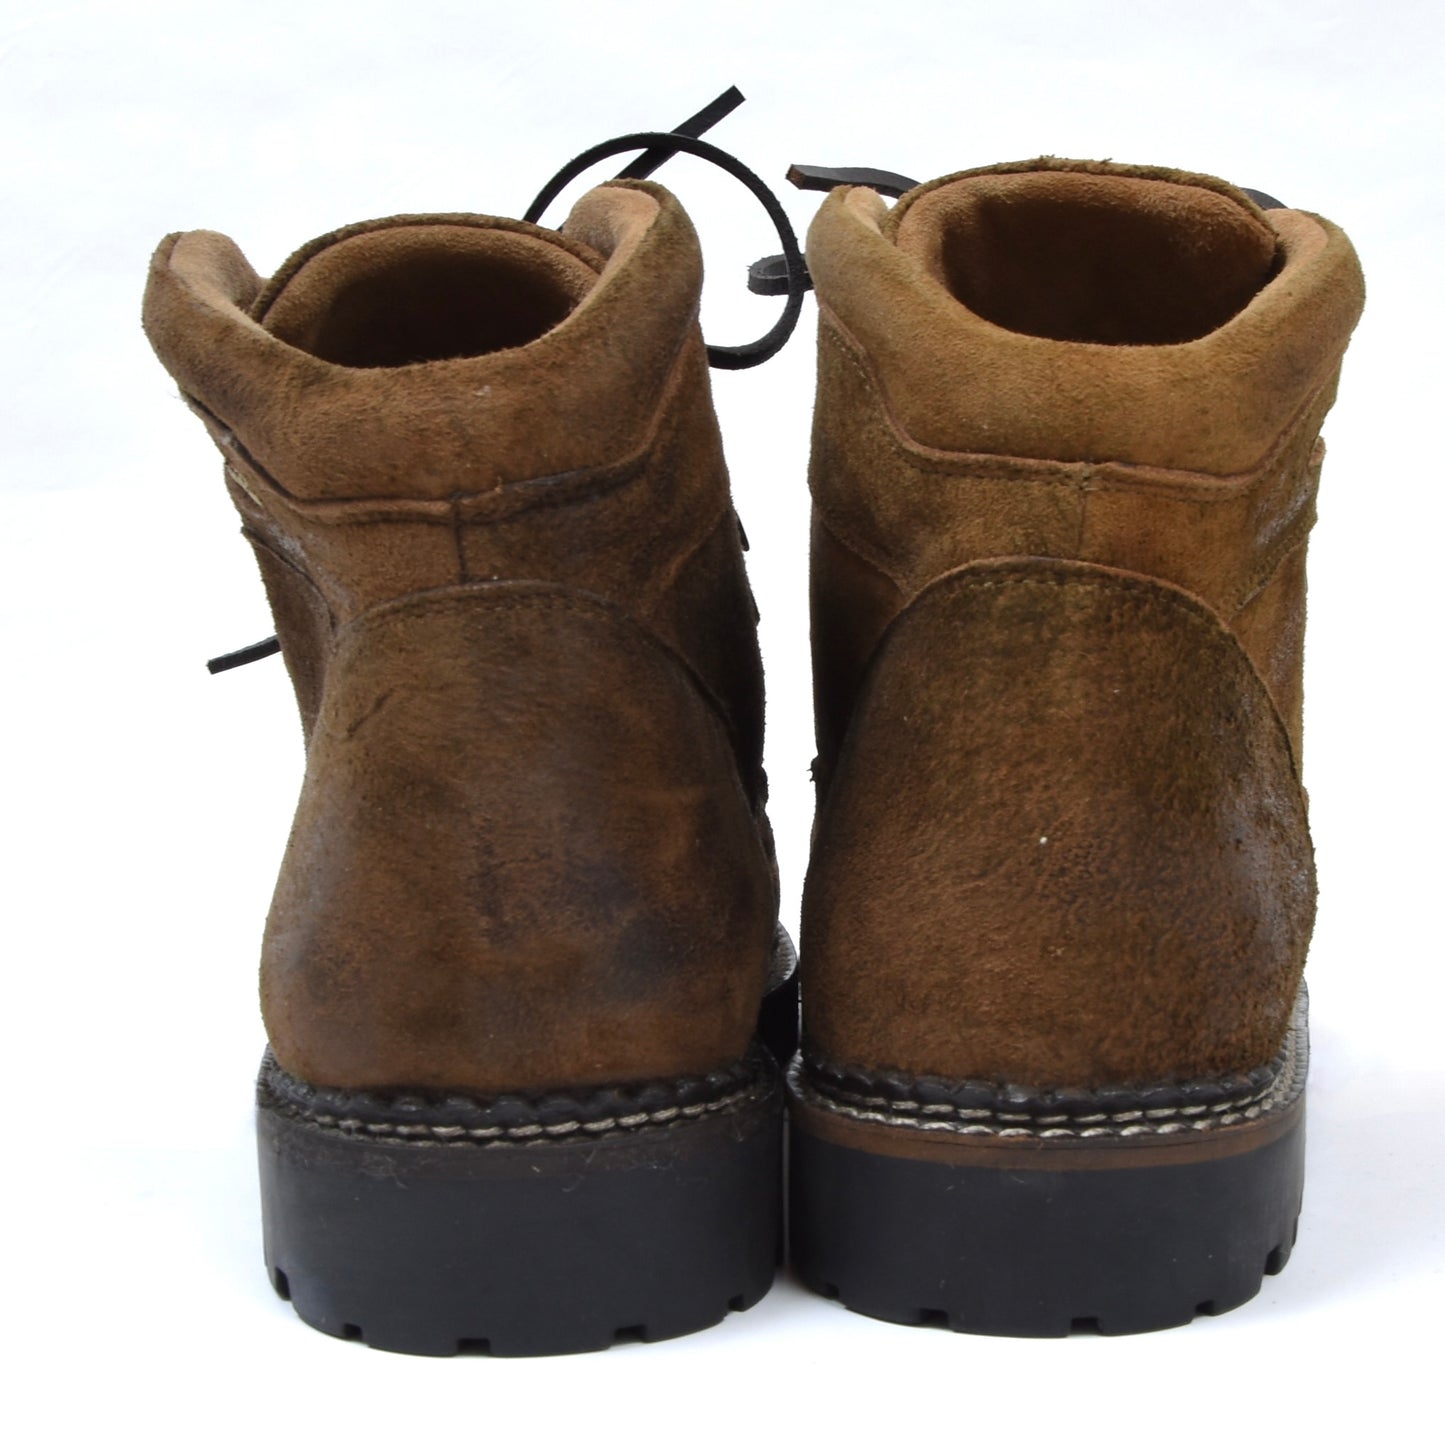 NWOB Stockerpoint Havana Boots Size 40 - Brown